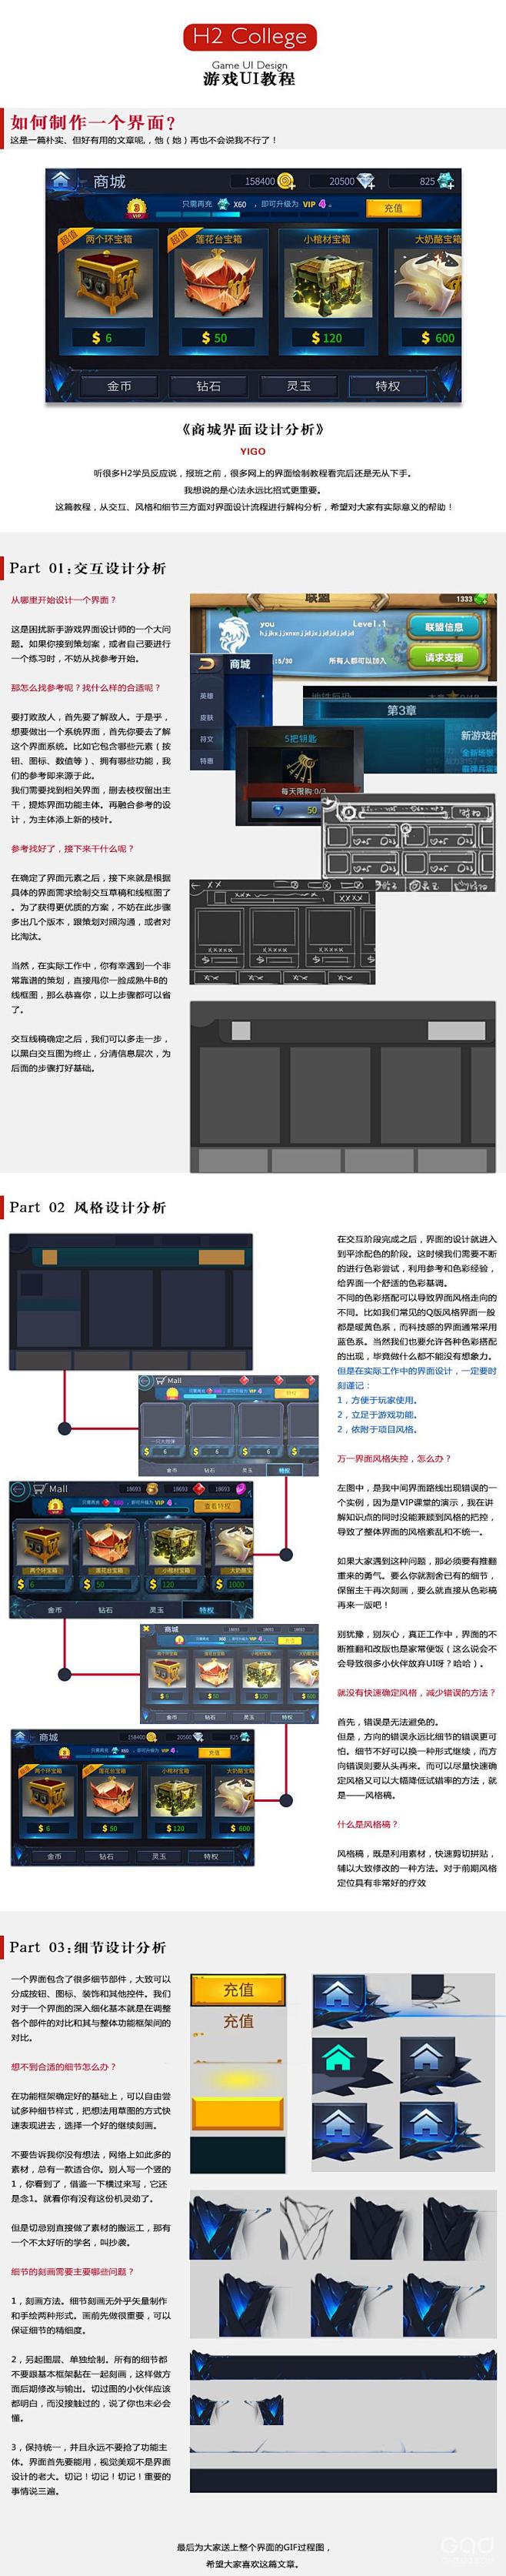 【H2学院】游戏美术-UI篇商城界面设计...